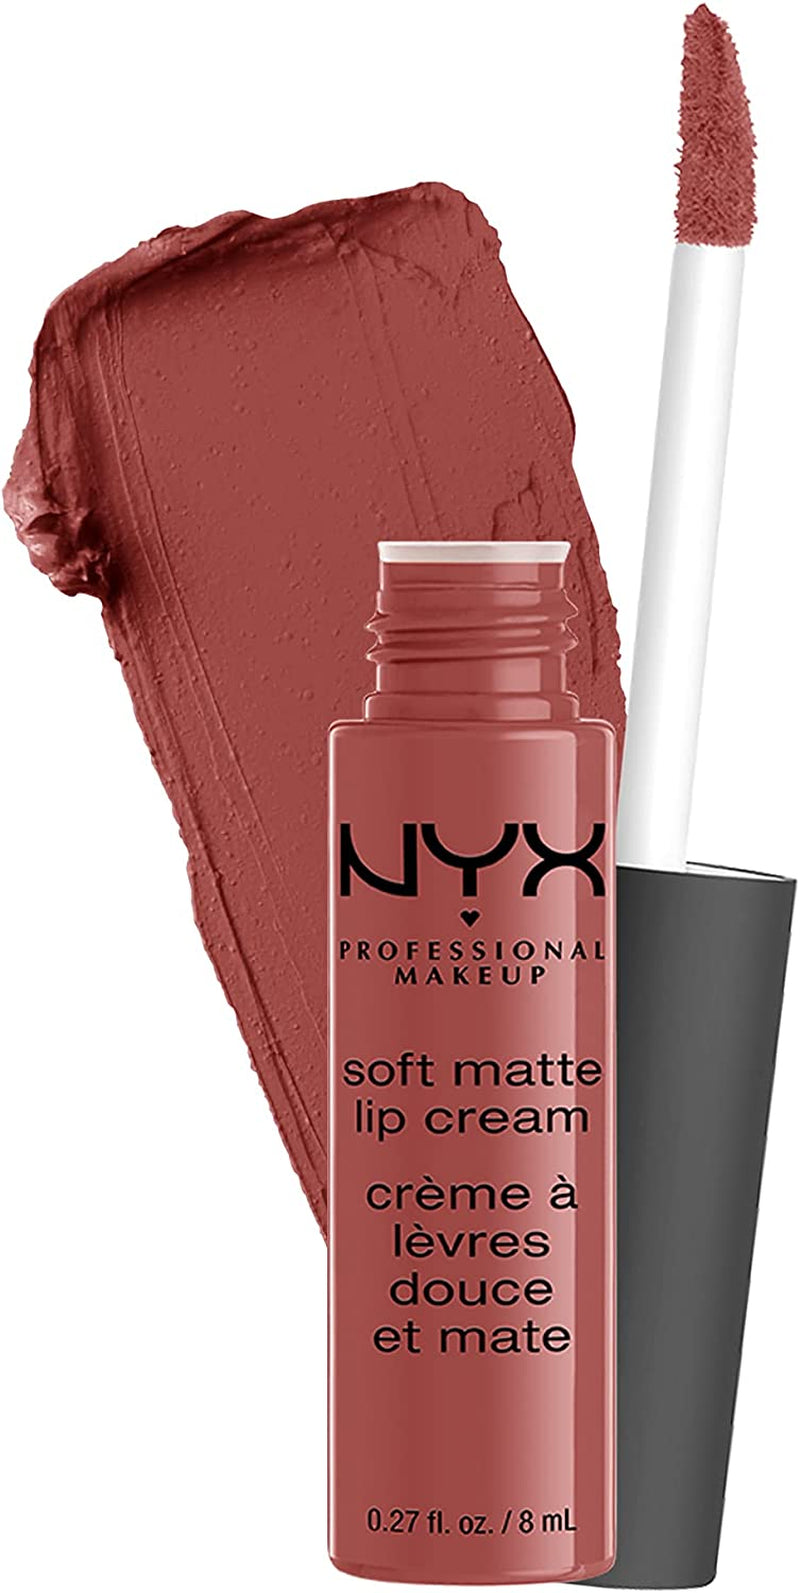 Soft Matte Lip Cream, Creamy and Matte Finish, Highly Pigmented Colour, Long Lasting, Vegan Formula, Shade: Rome